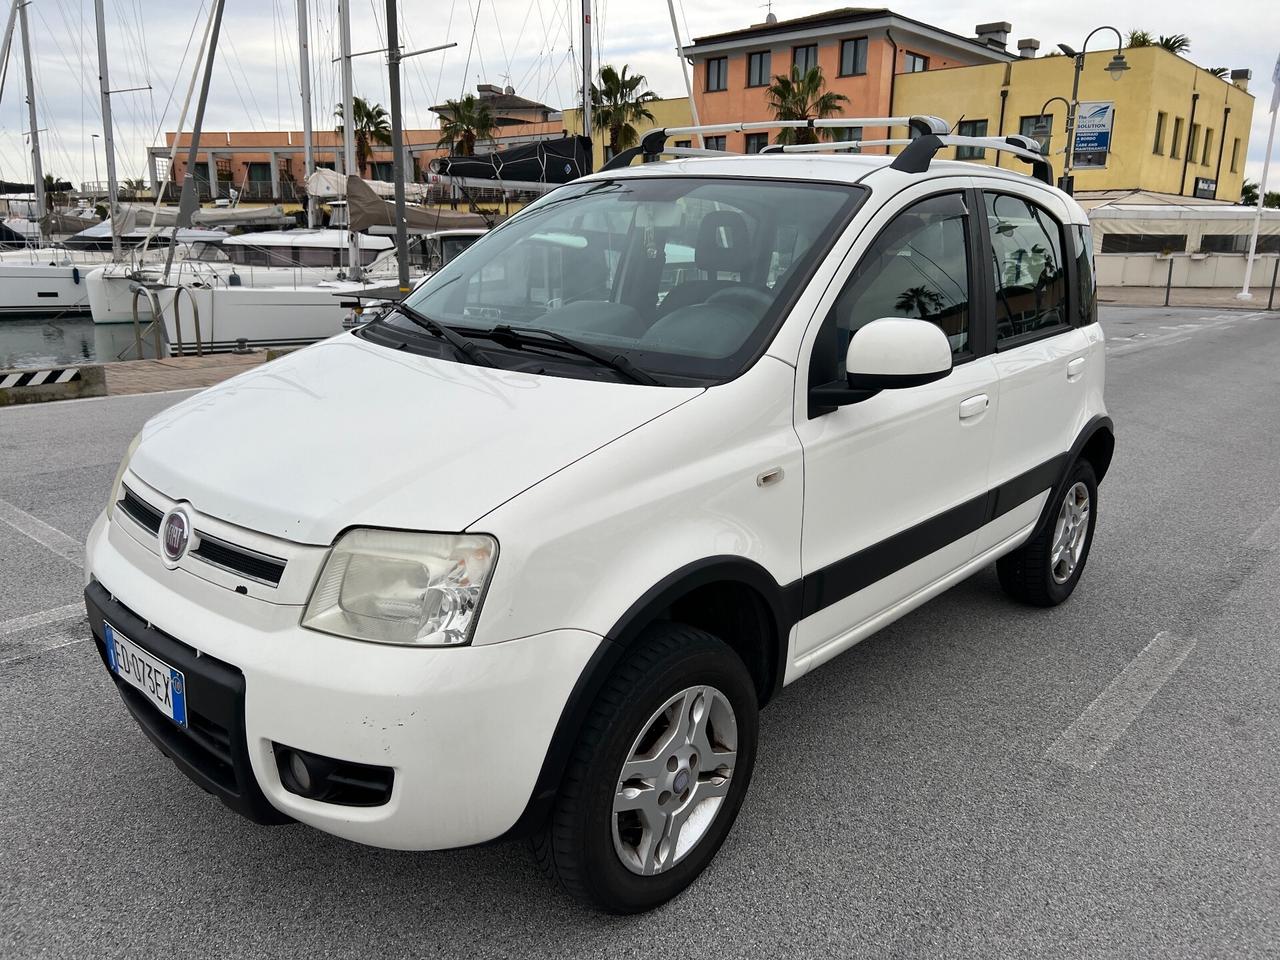 Fiat Panda 1.3 MJT -69 CV- 4x4 -GARANZIA 12 MESI